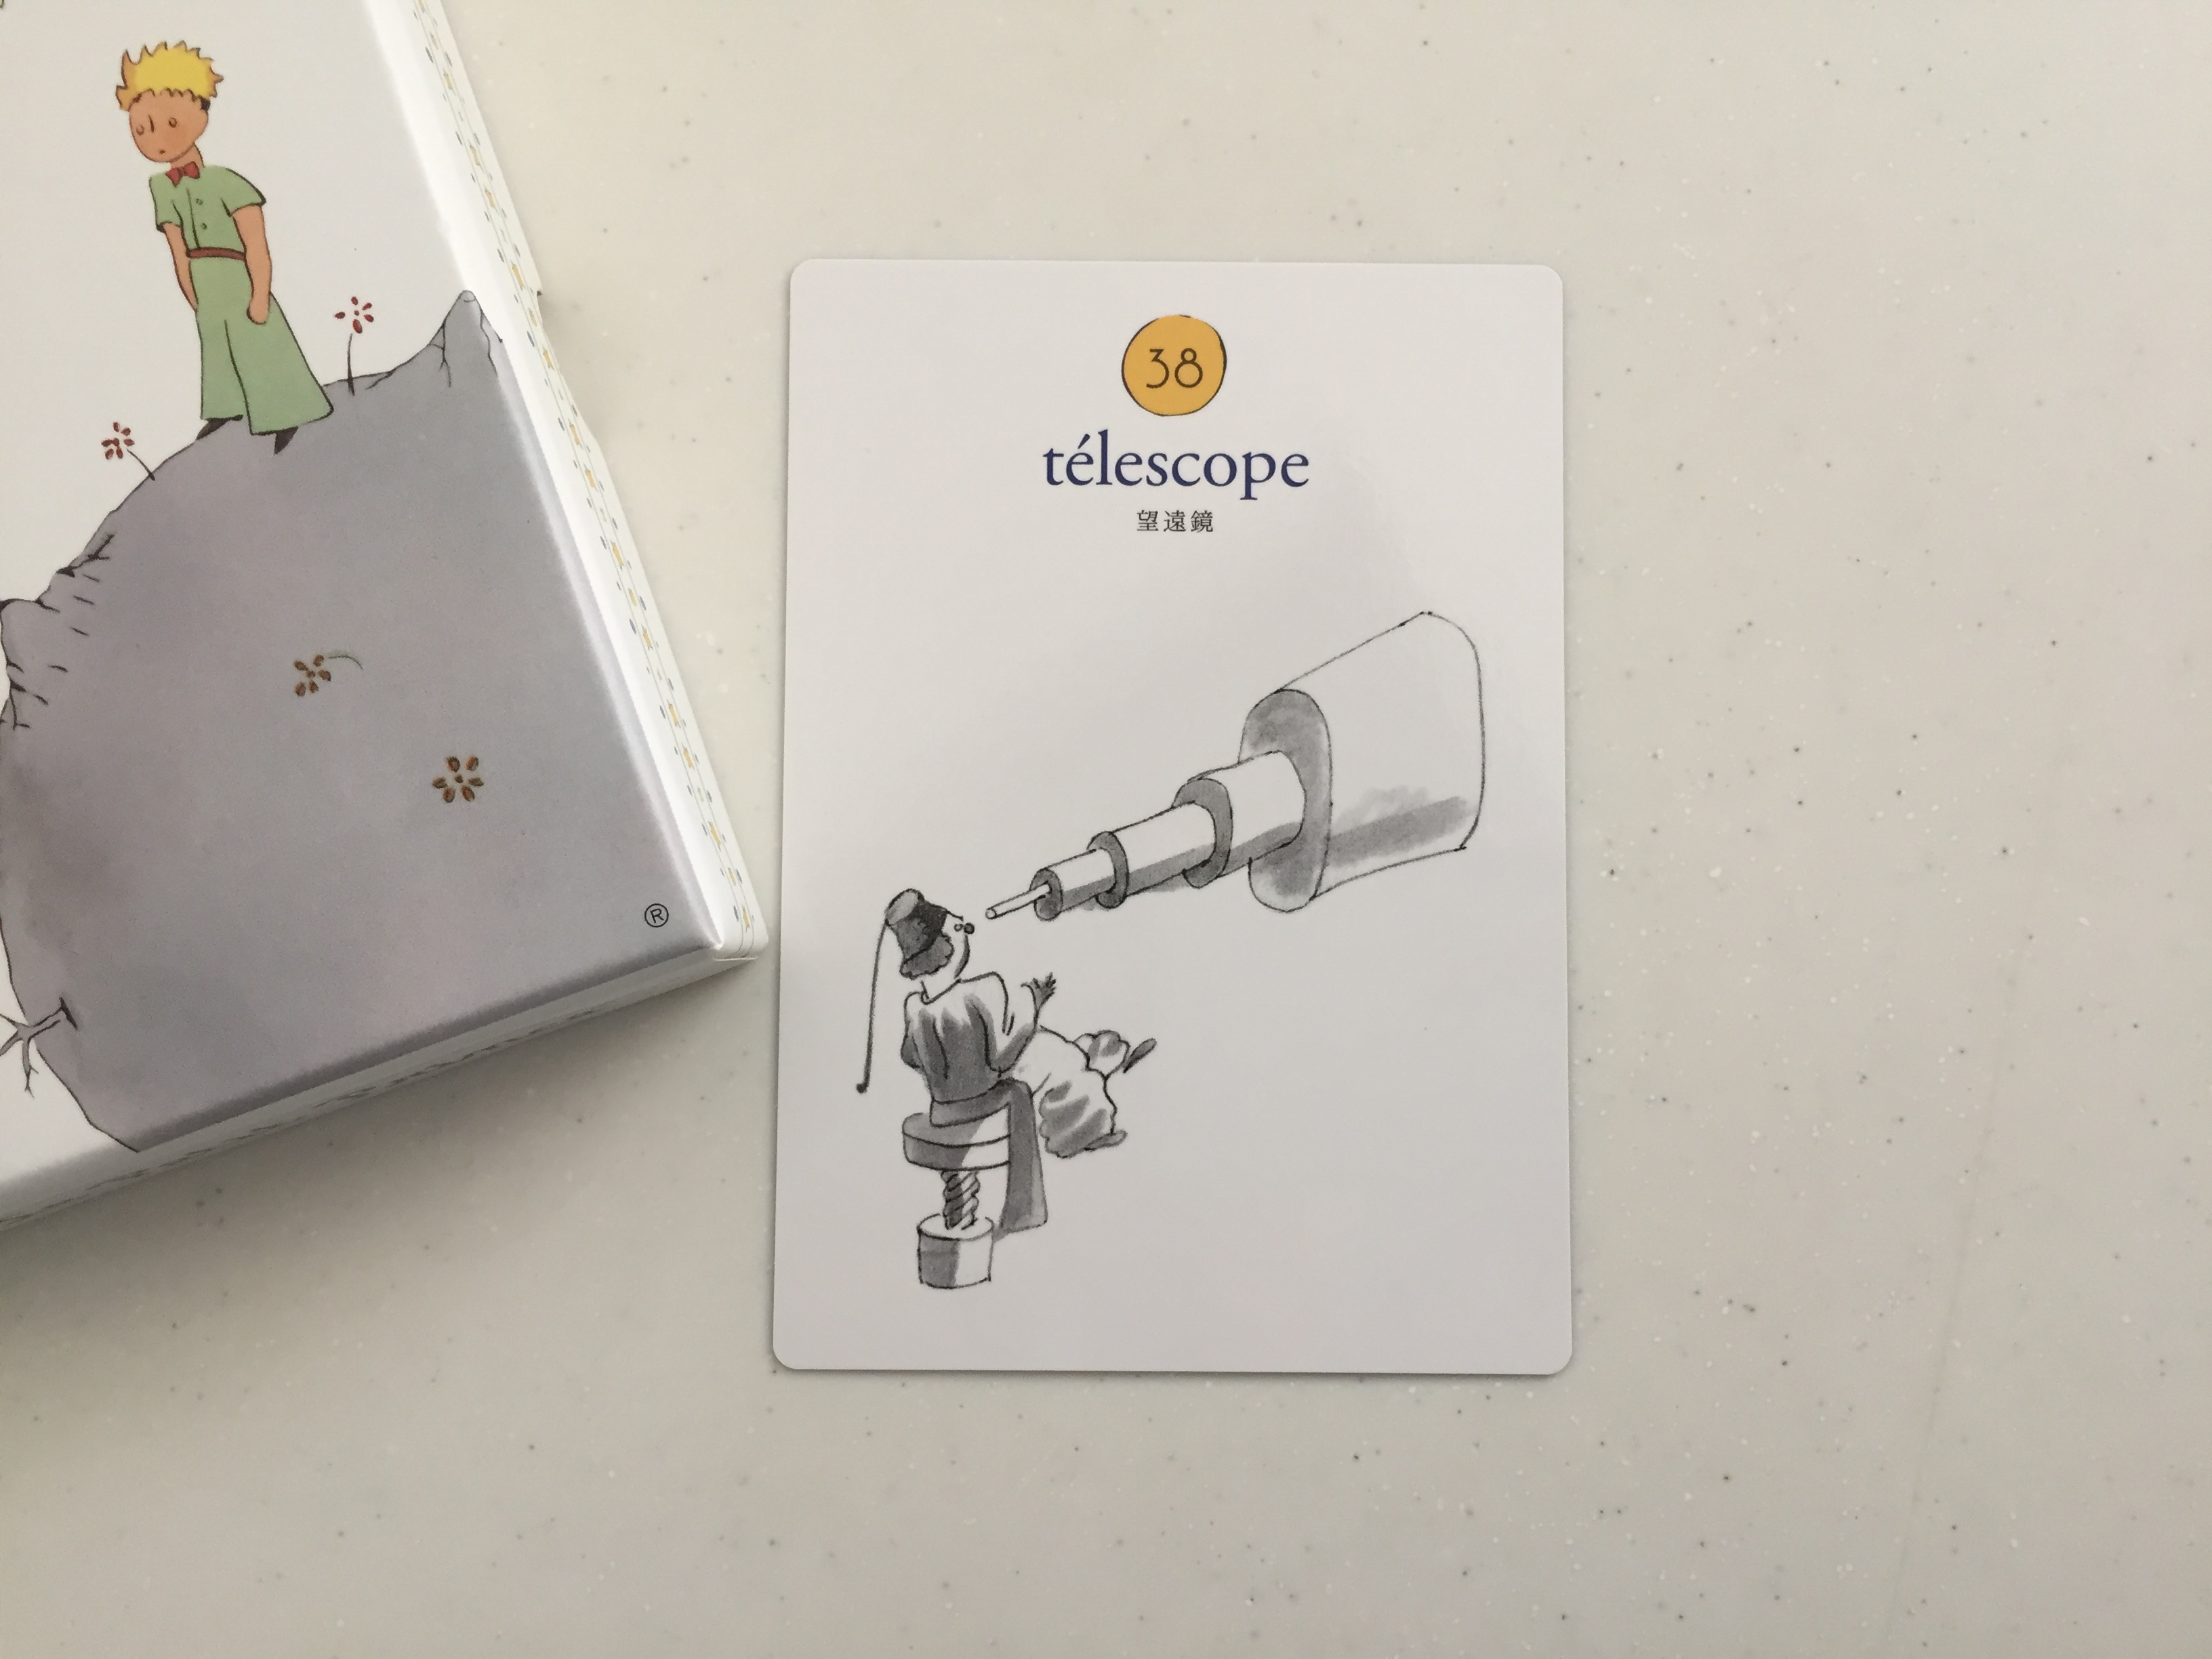 Today's prince card 『telescope 望遠鏡』